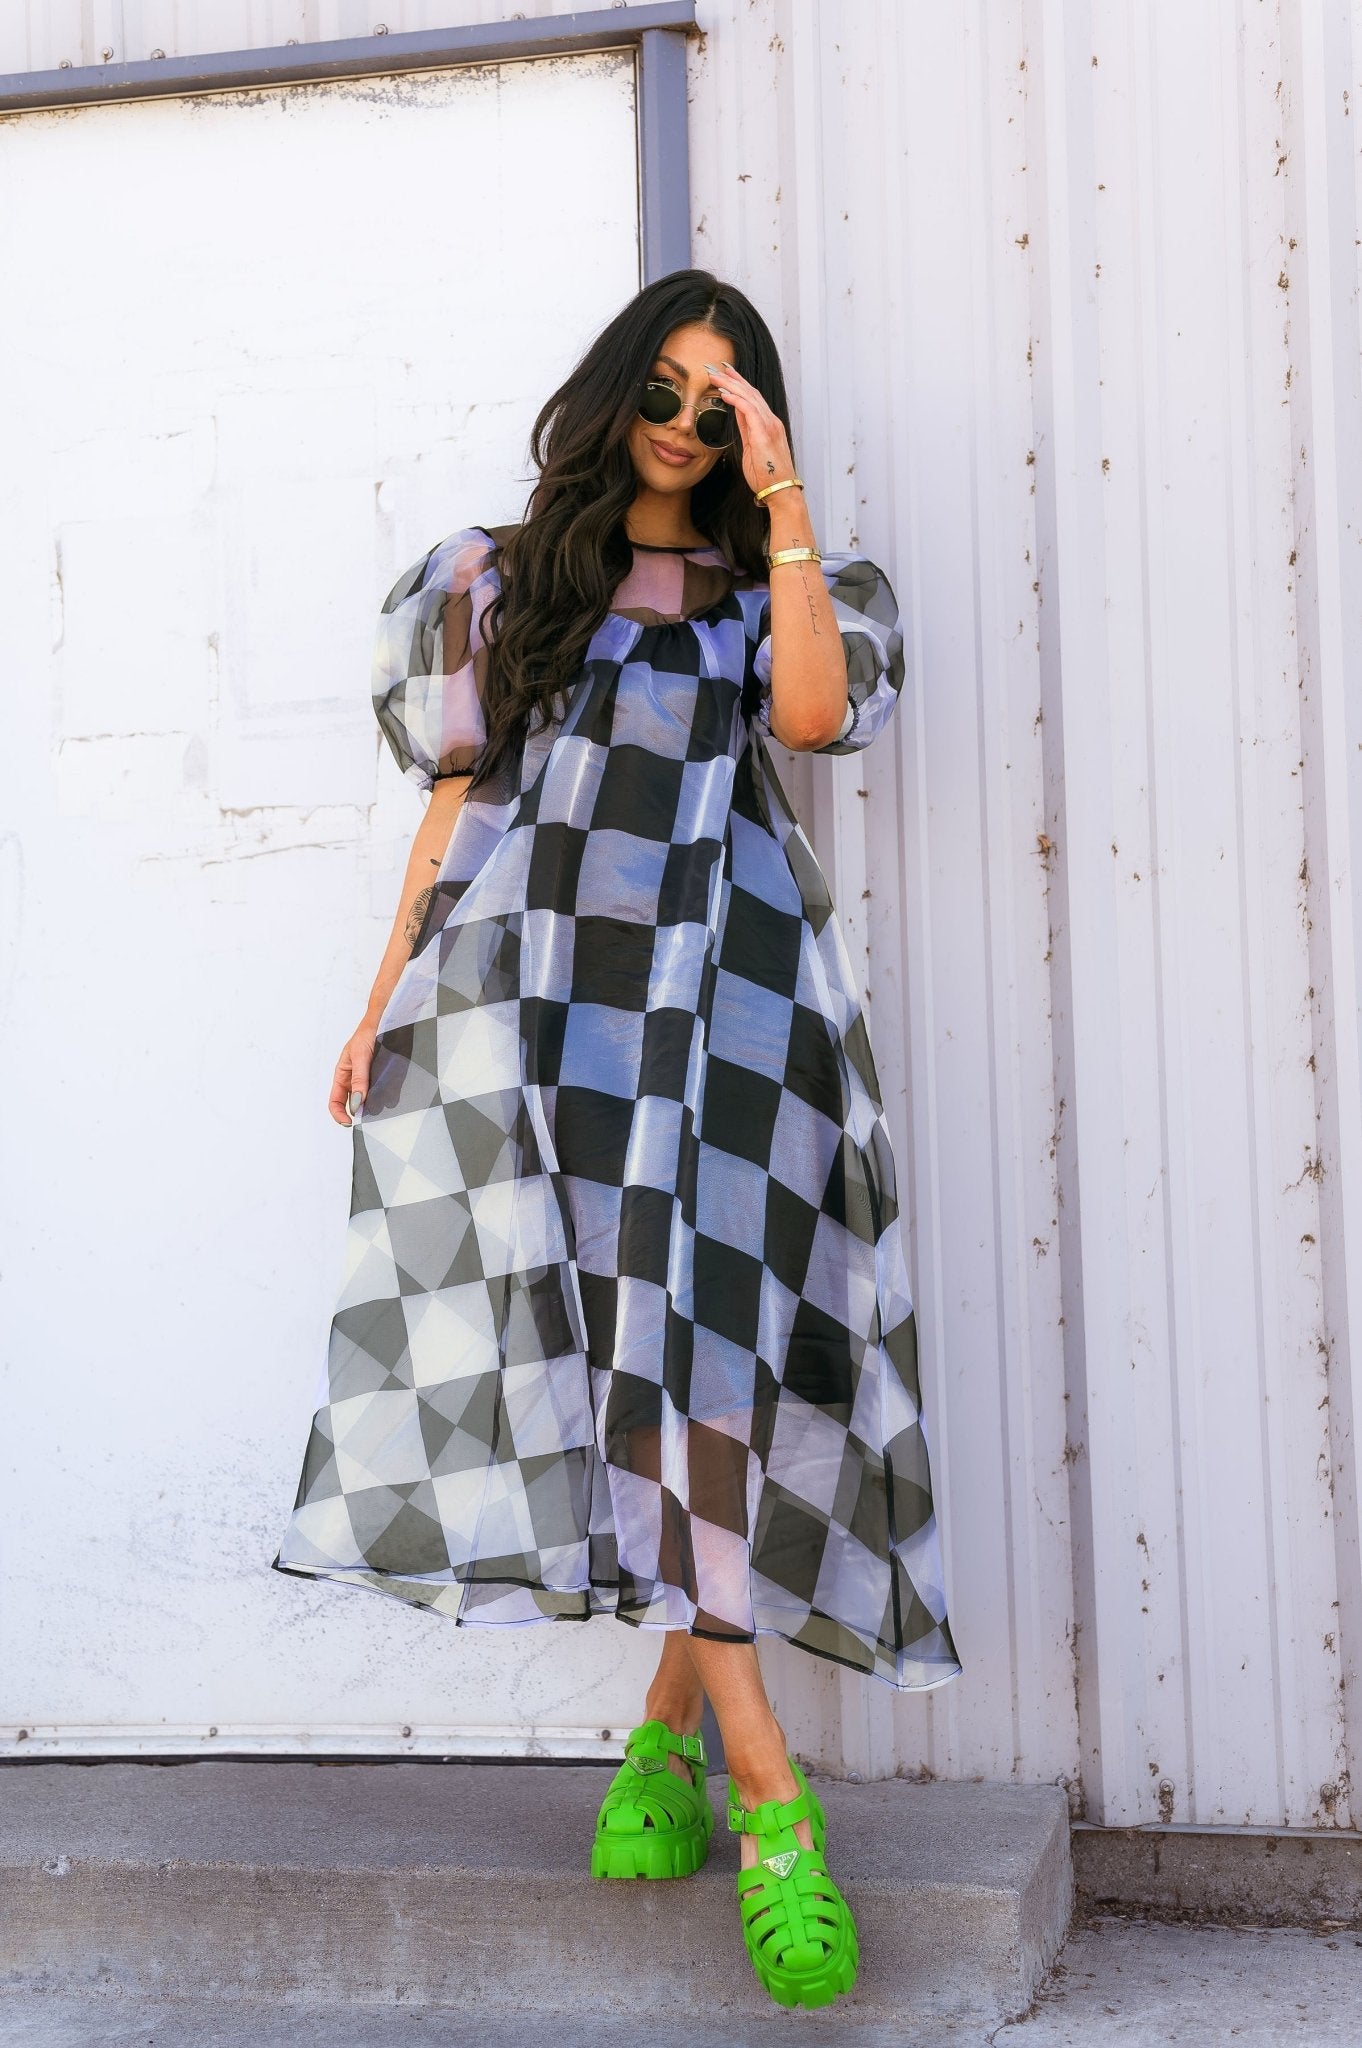 LALA ORIGINAL: Star Energy Organza Dress in Checkerboard – Dressed